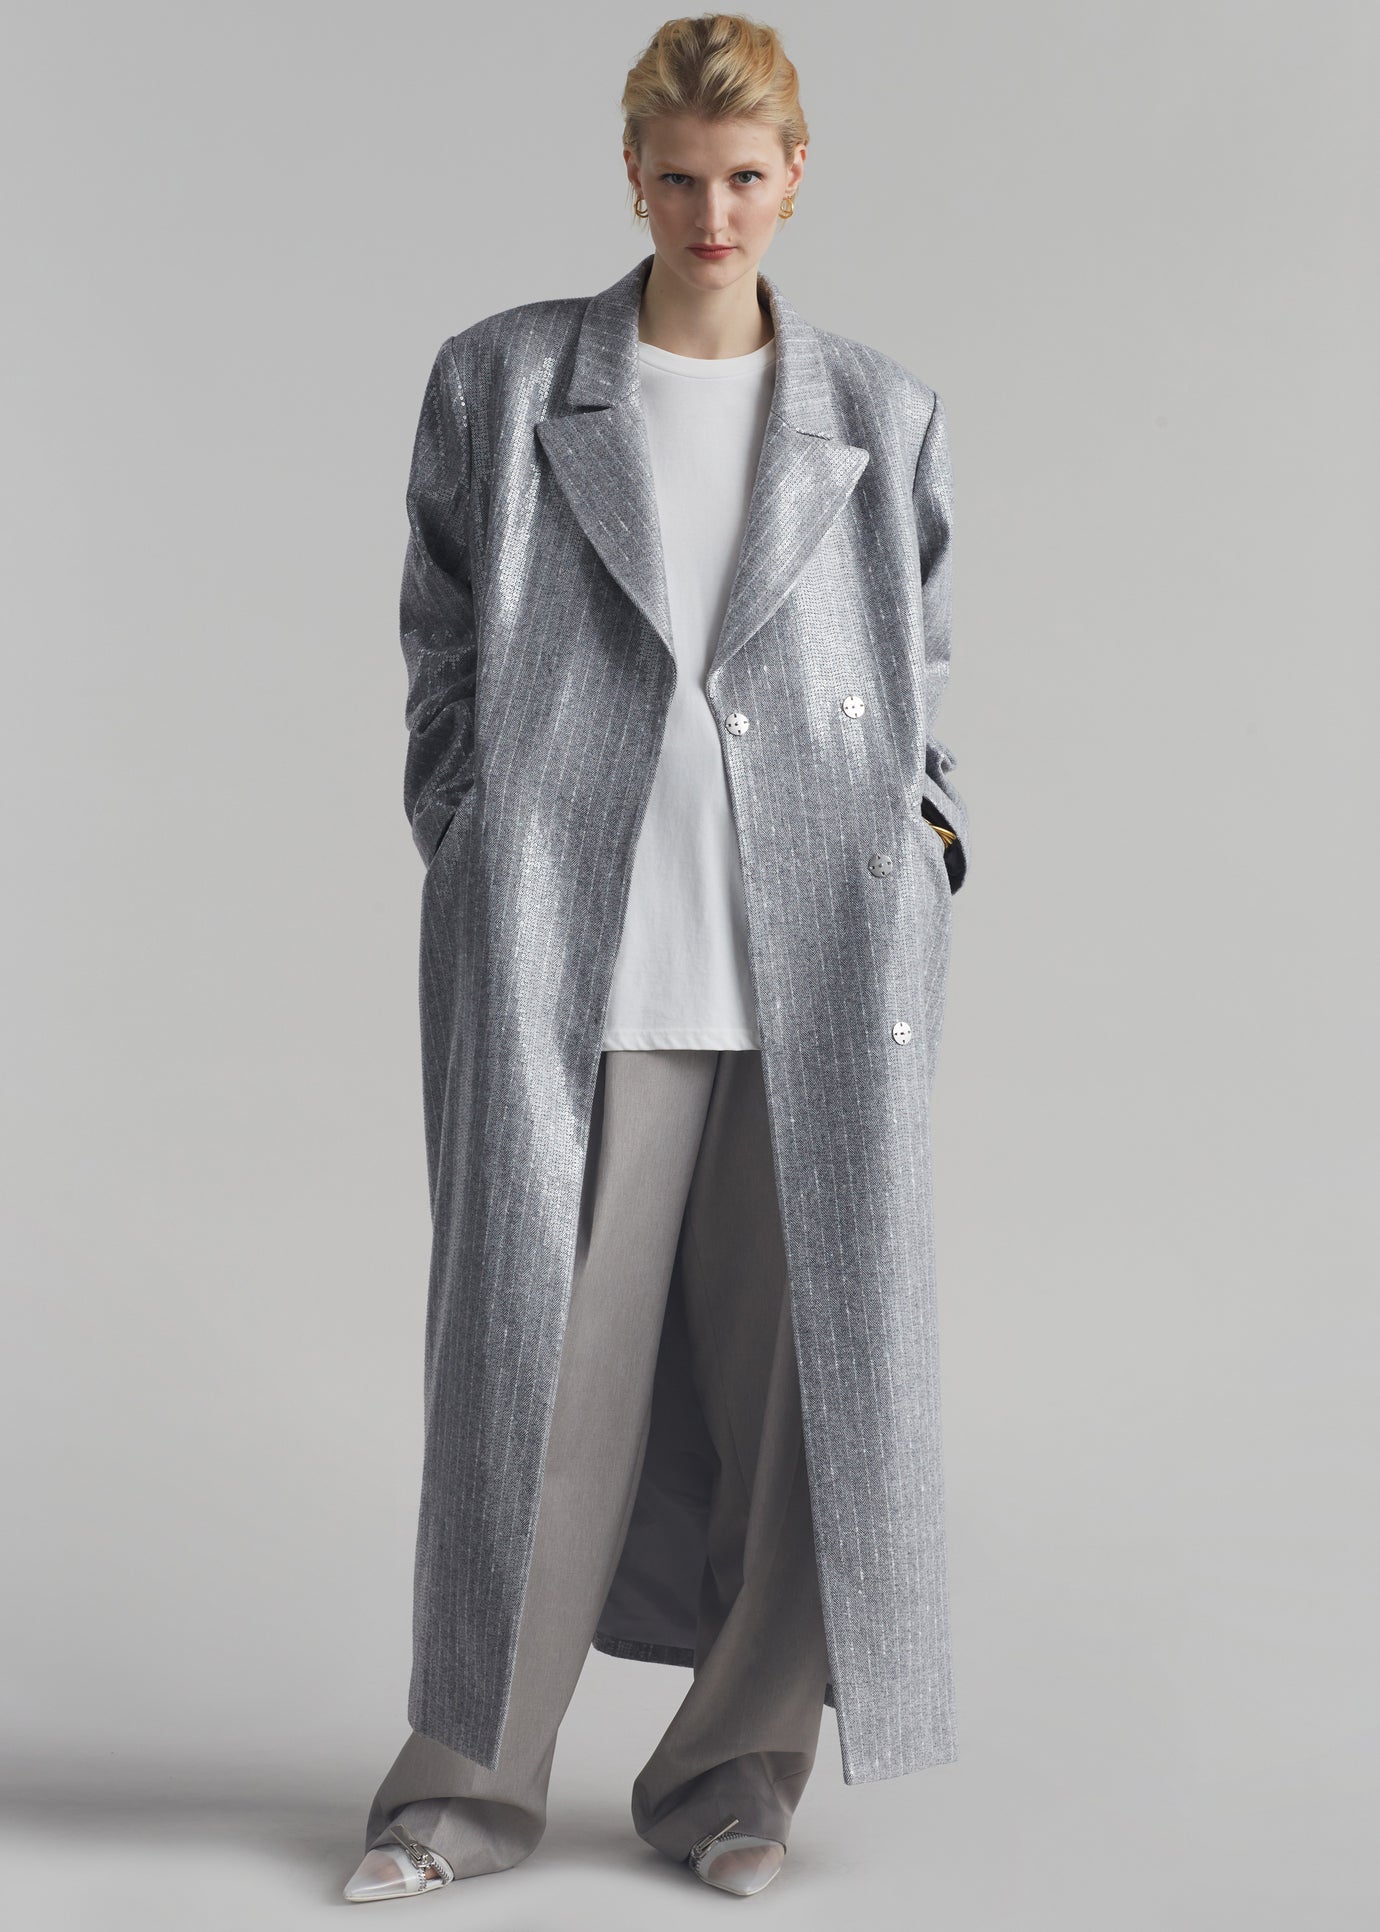 Jennifer Sequins Coat - Grey/White Stripe